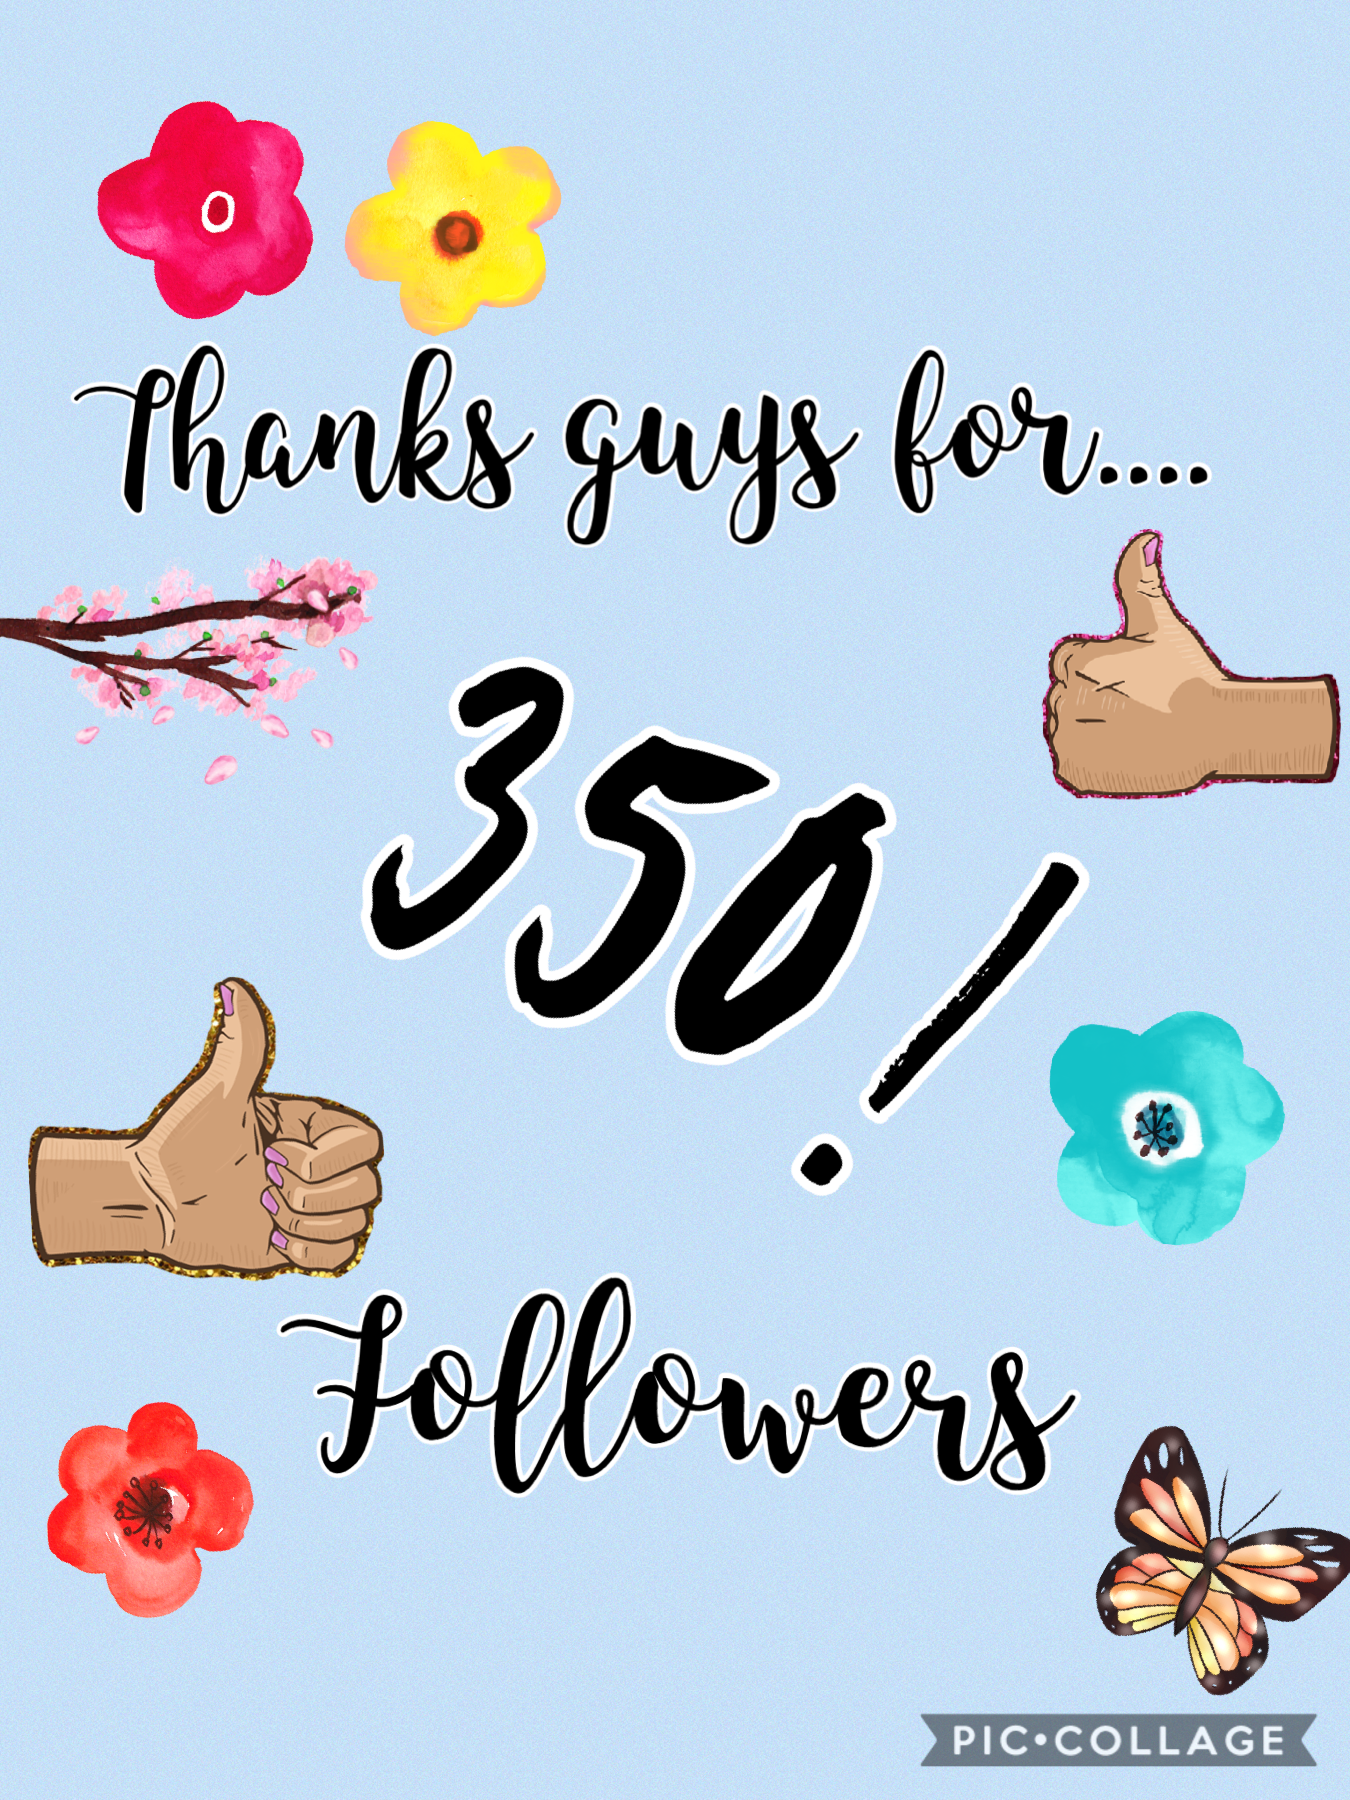 🙏🏻 thanks guys!